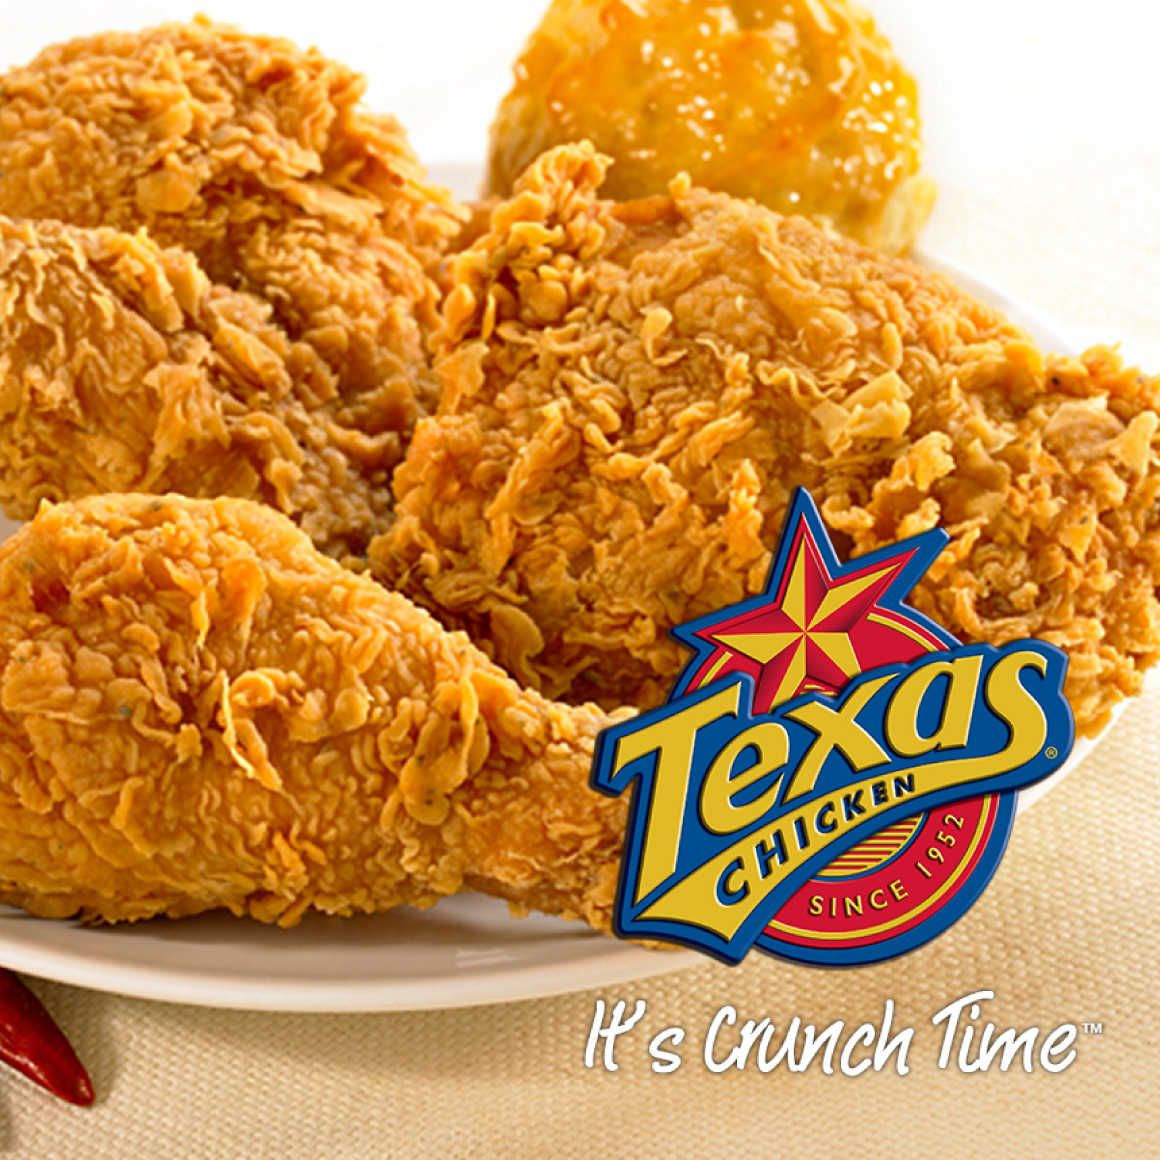 Campaign Texas Chicken